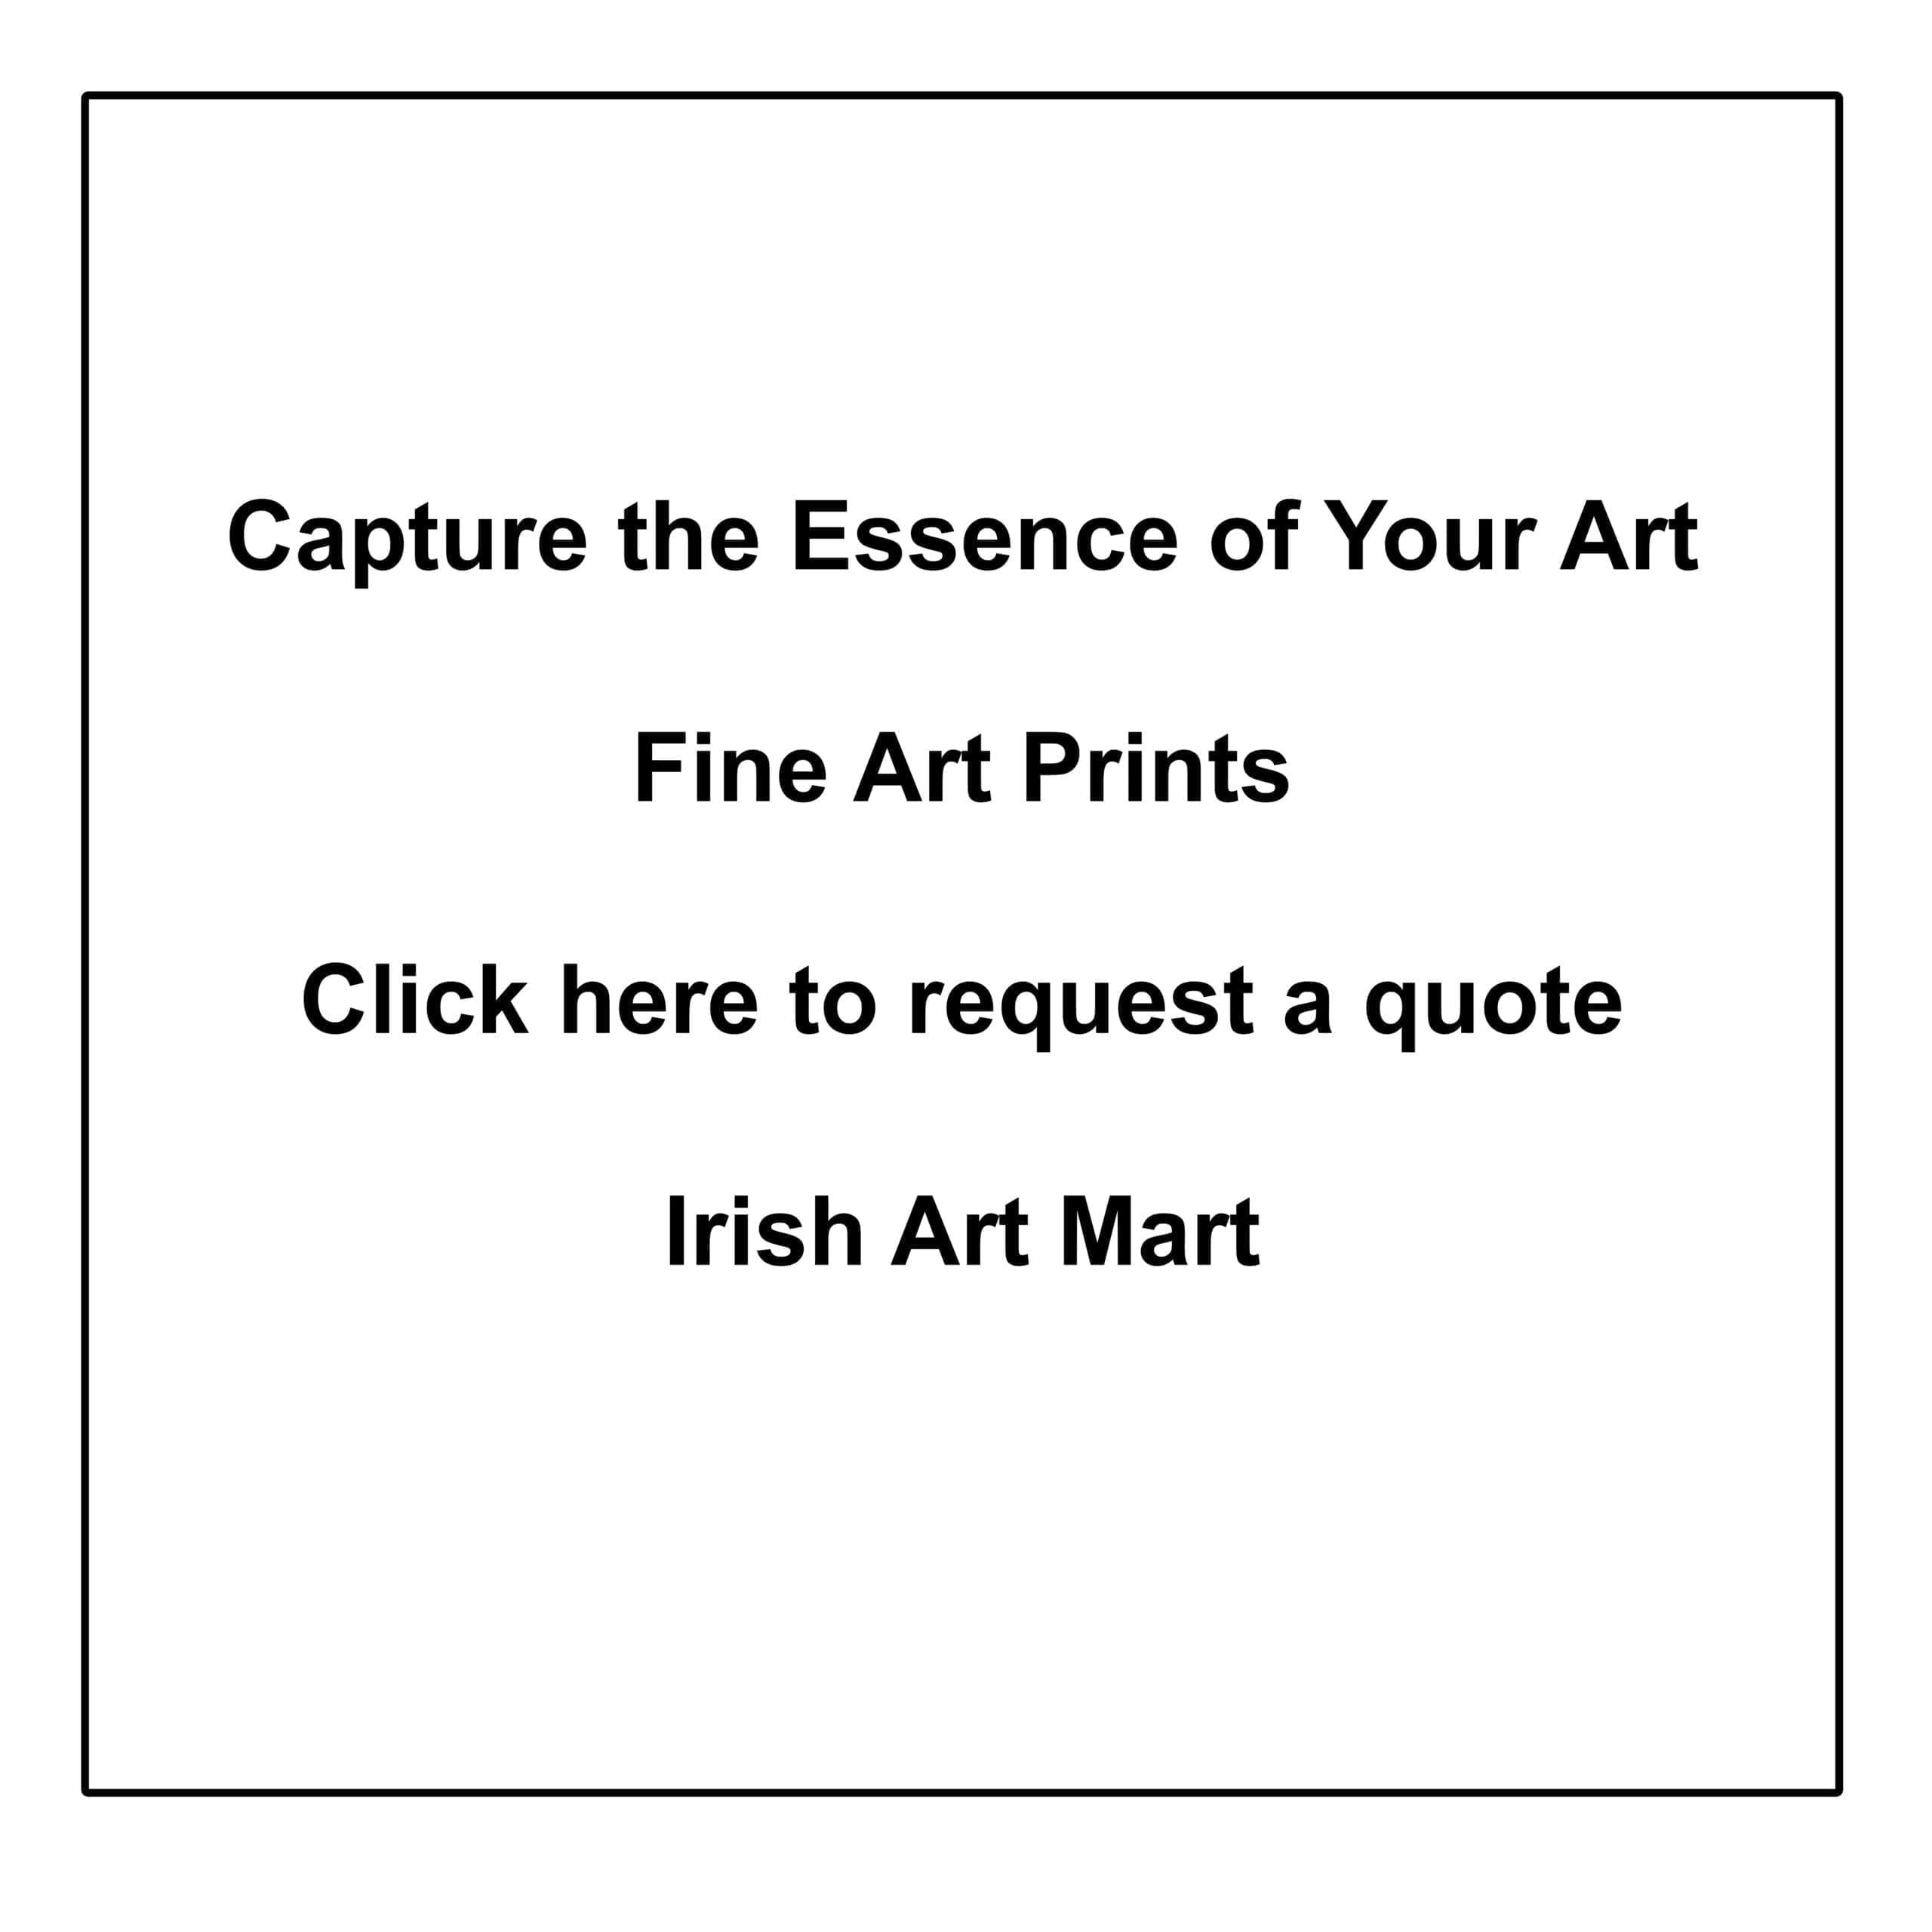 Irish artmart Fine Art Prints